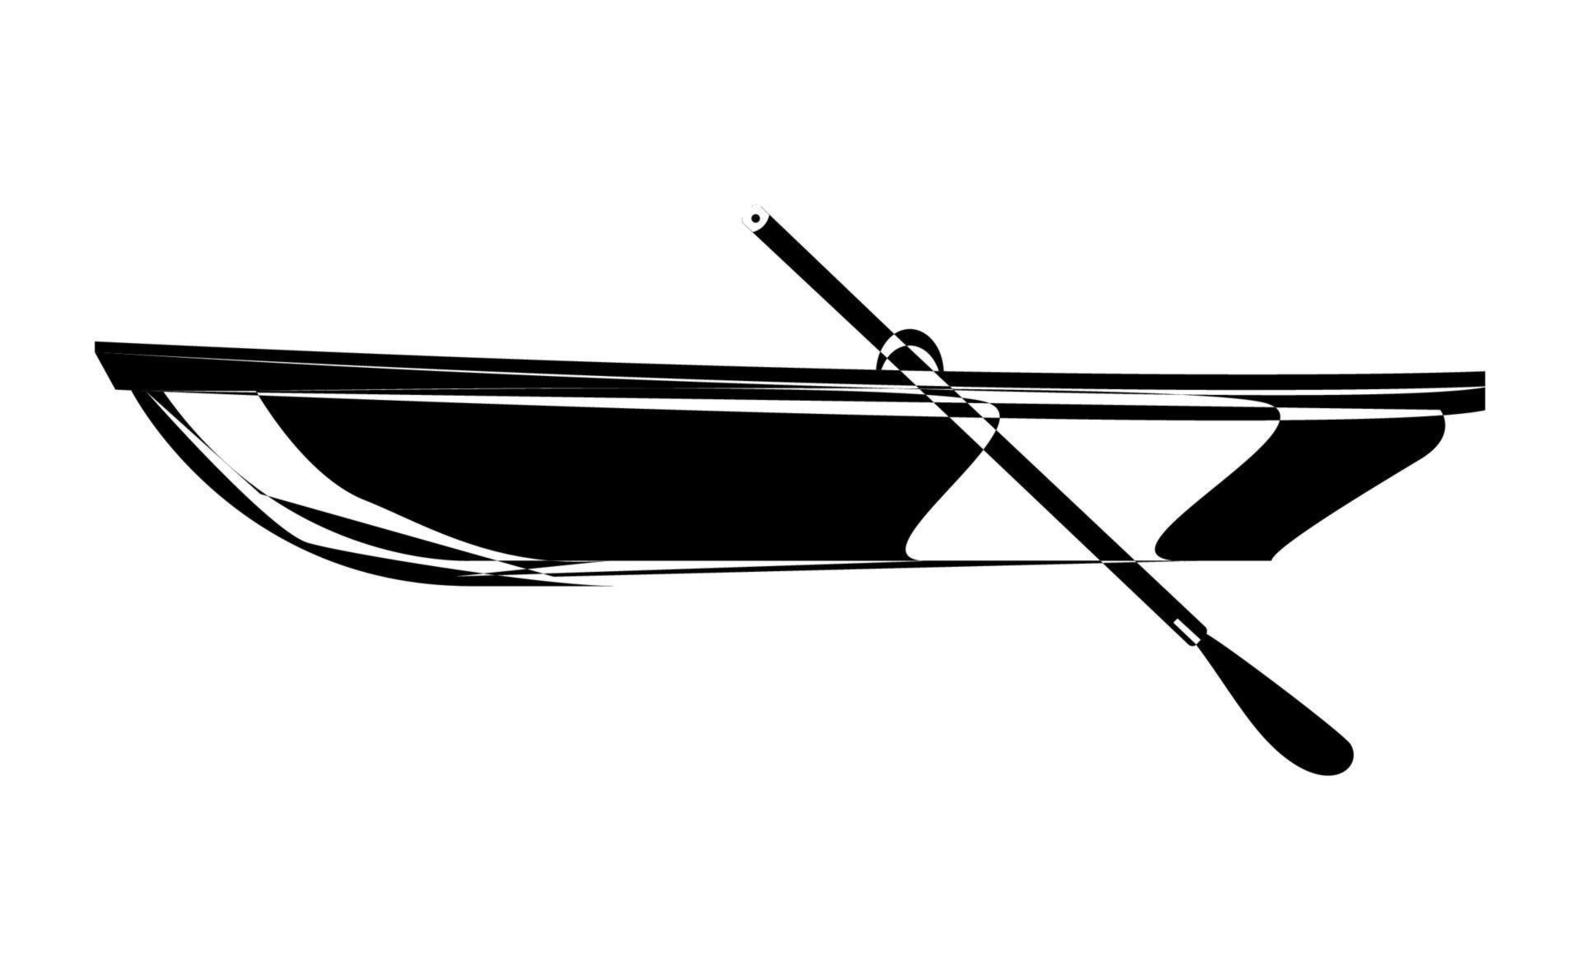 icono de barco de madera. simple silueta de barco negro. ilustración vectorial de contorno aislada sobre fondo blanco. vector